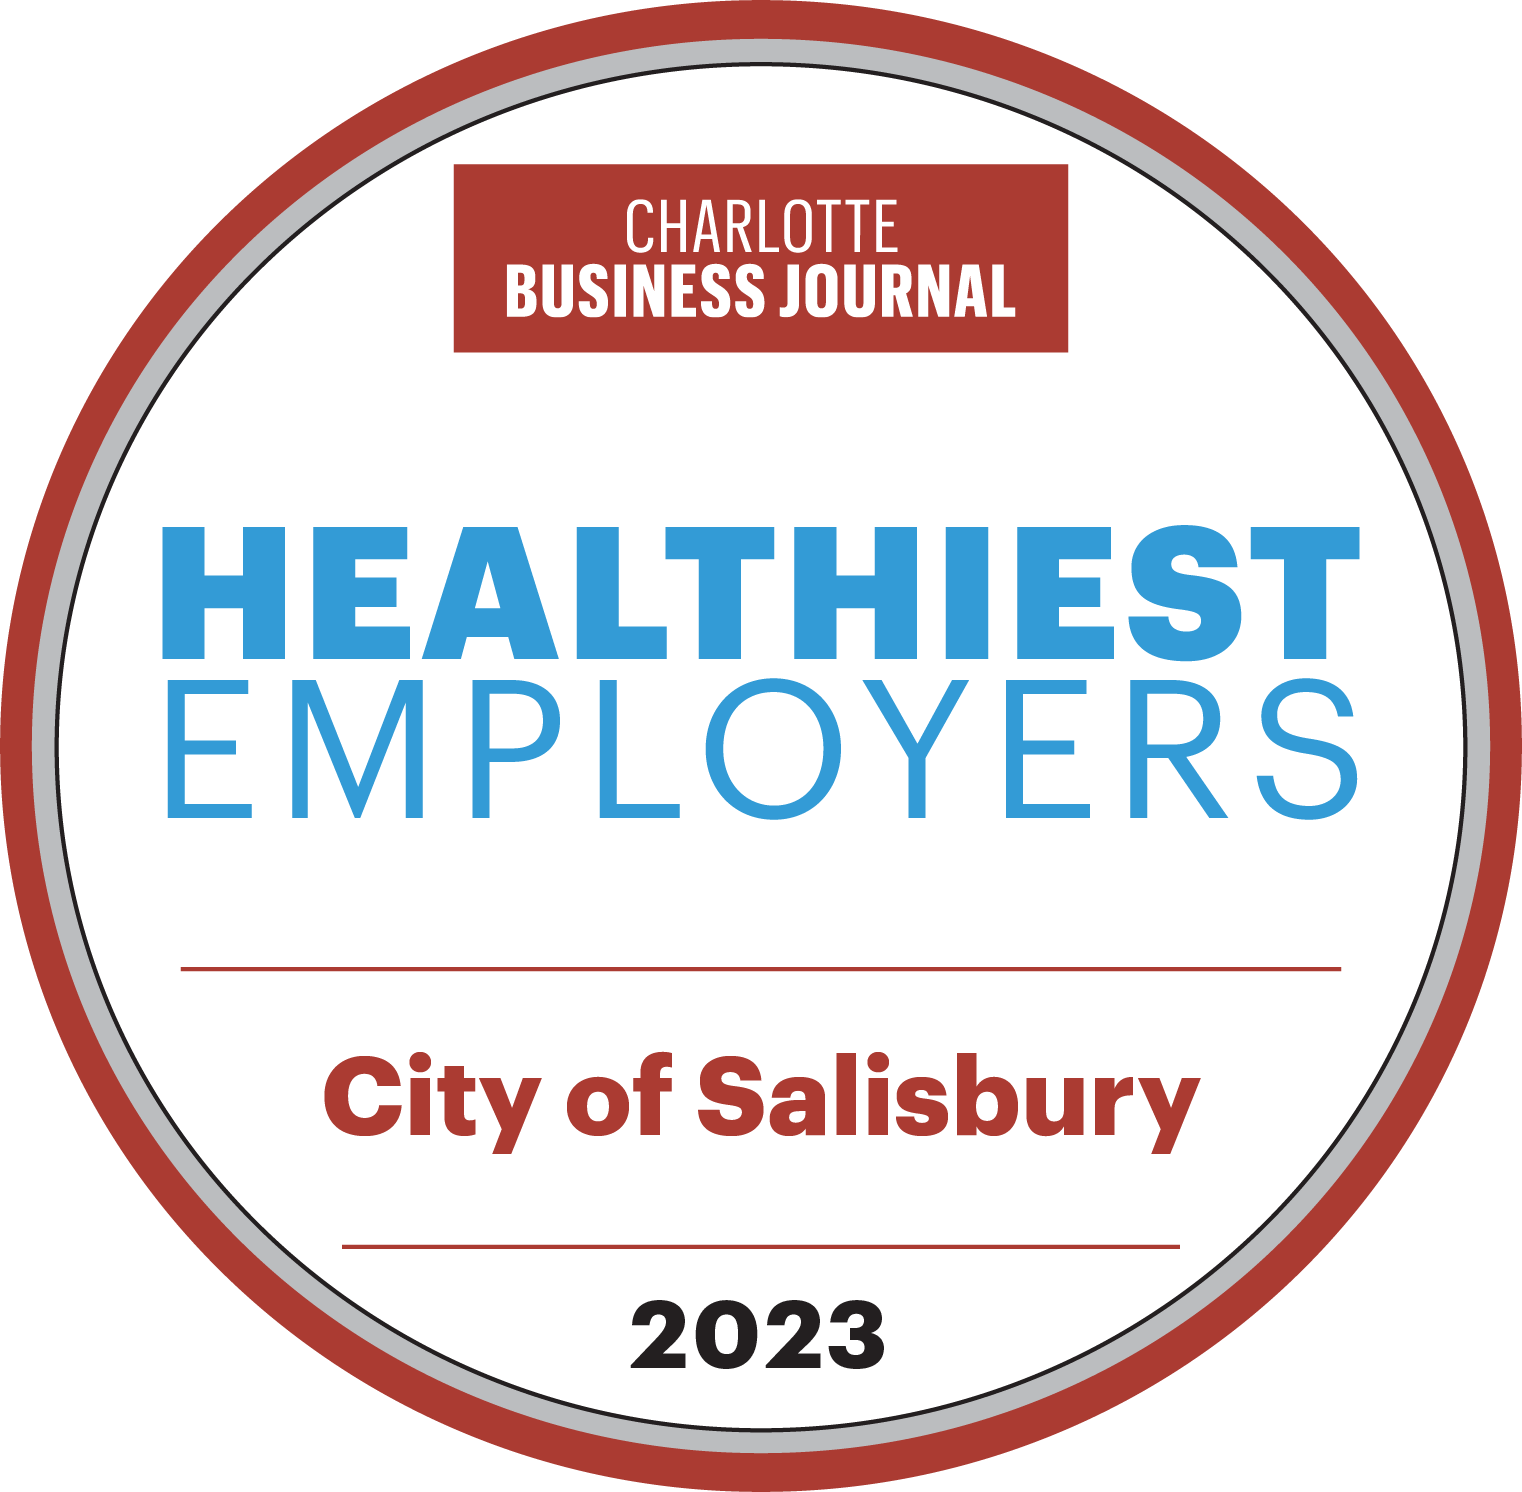 Healthiest Employers 2023 Award Badge